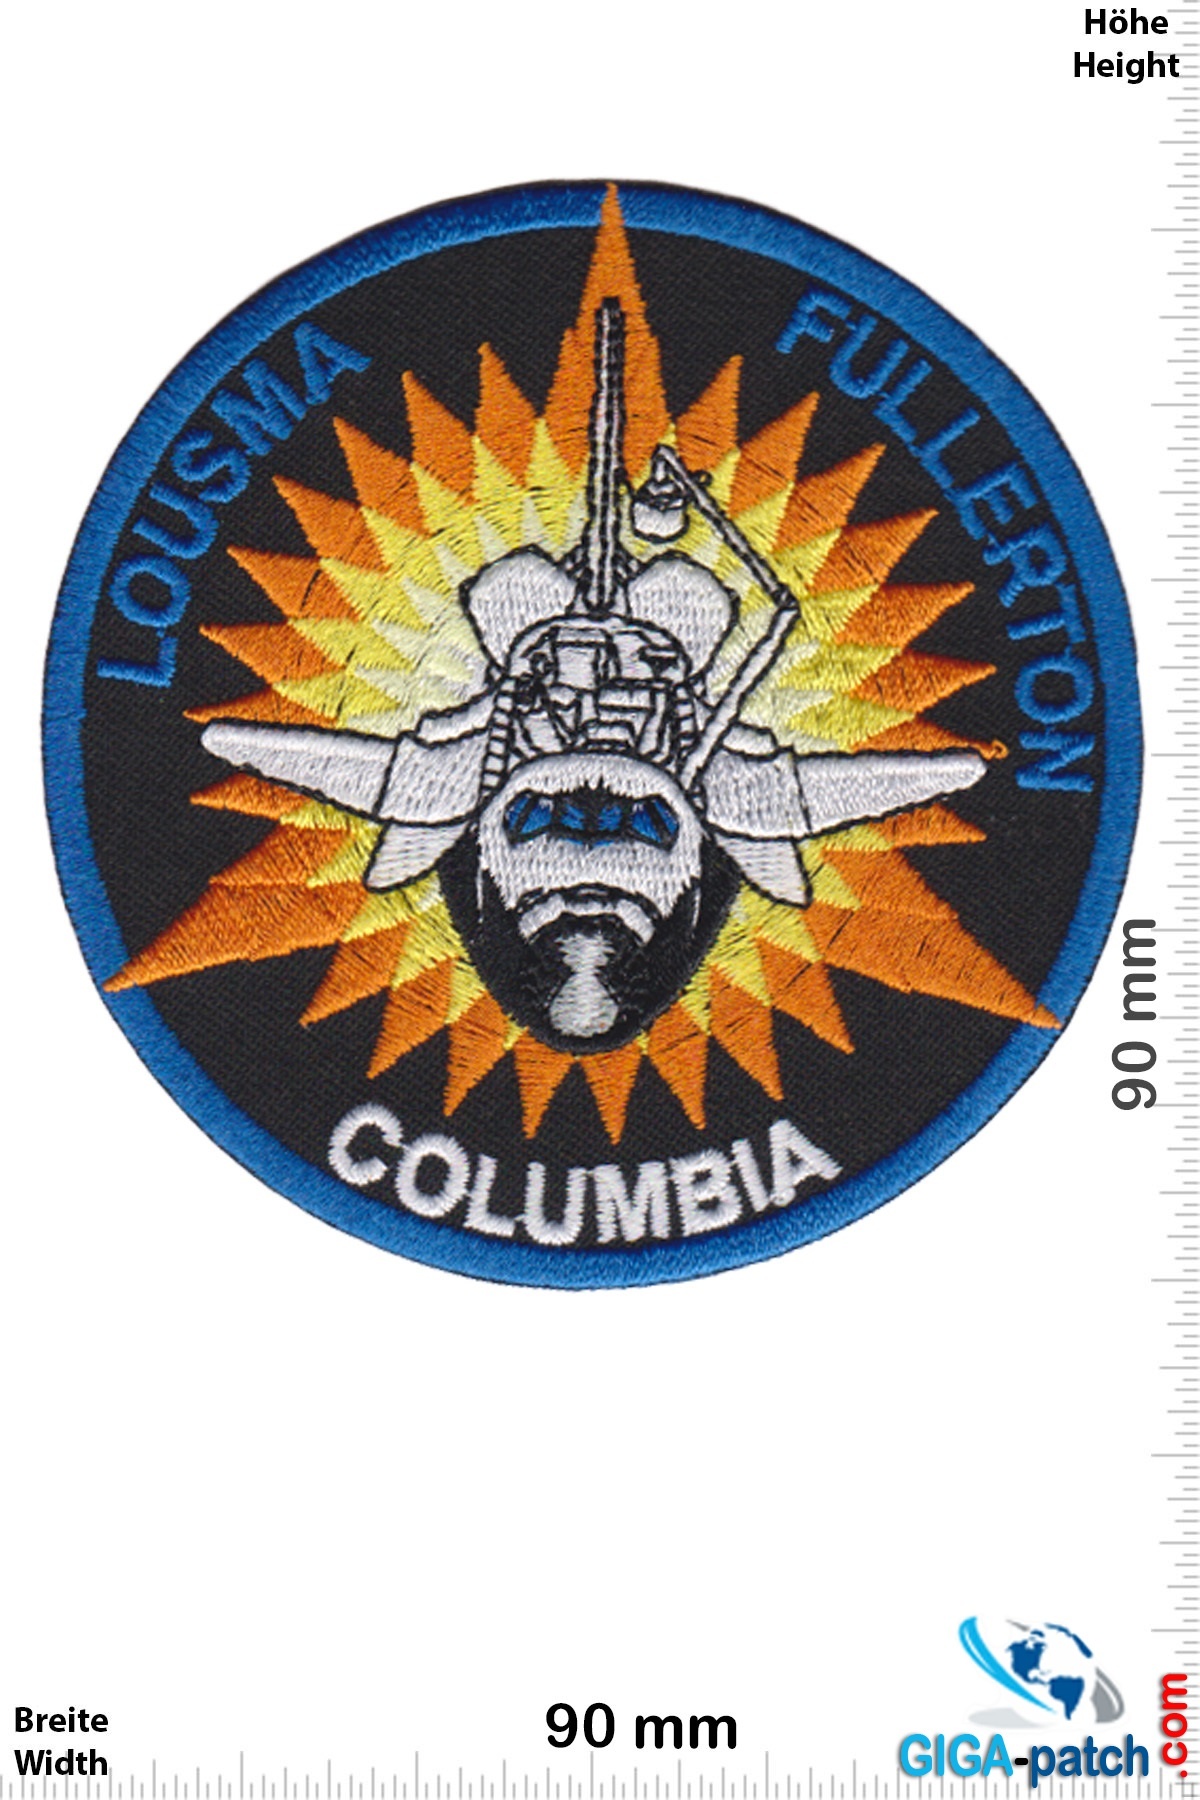 Nasa STS-3 - Space Shuttle Columbia - Lousma - Fullerton